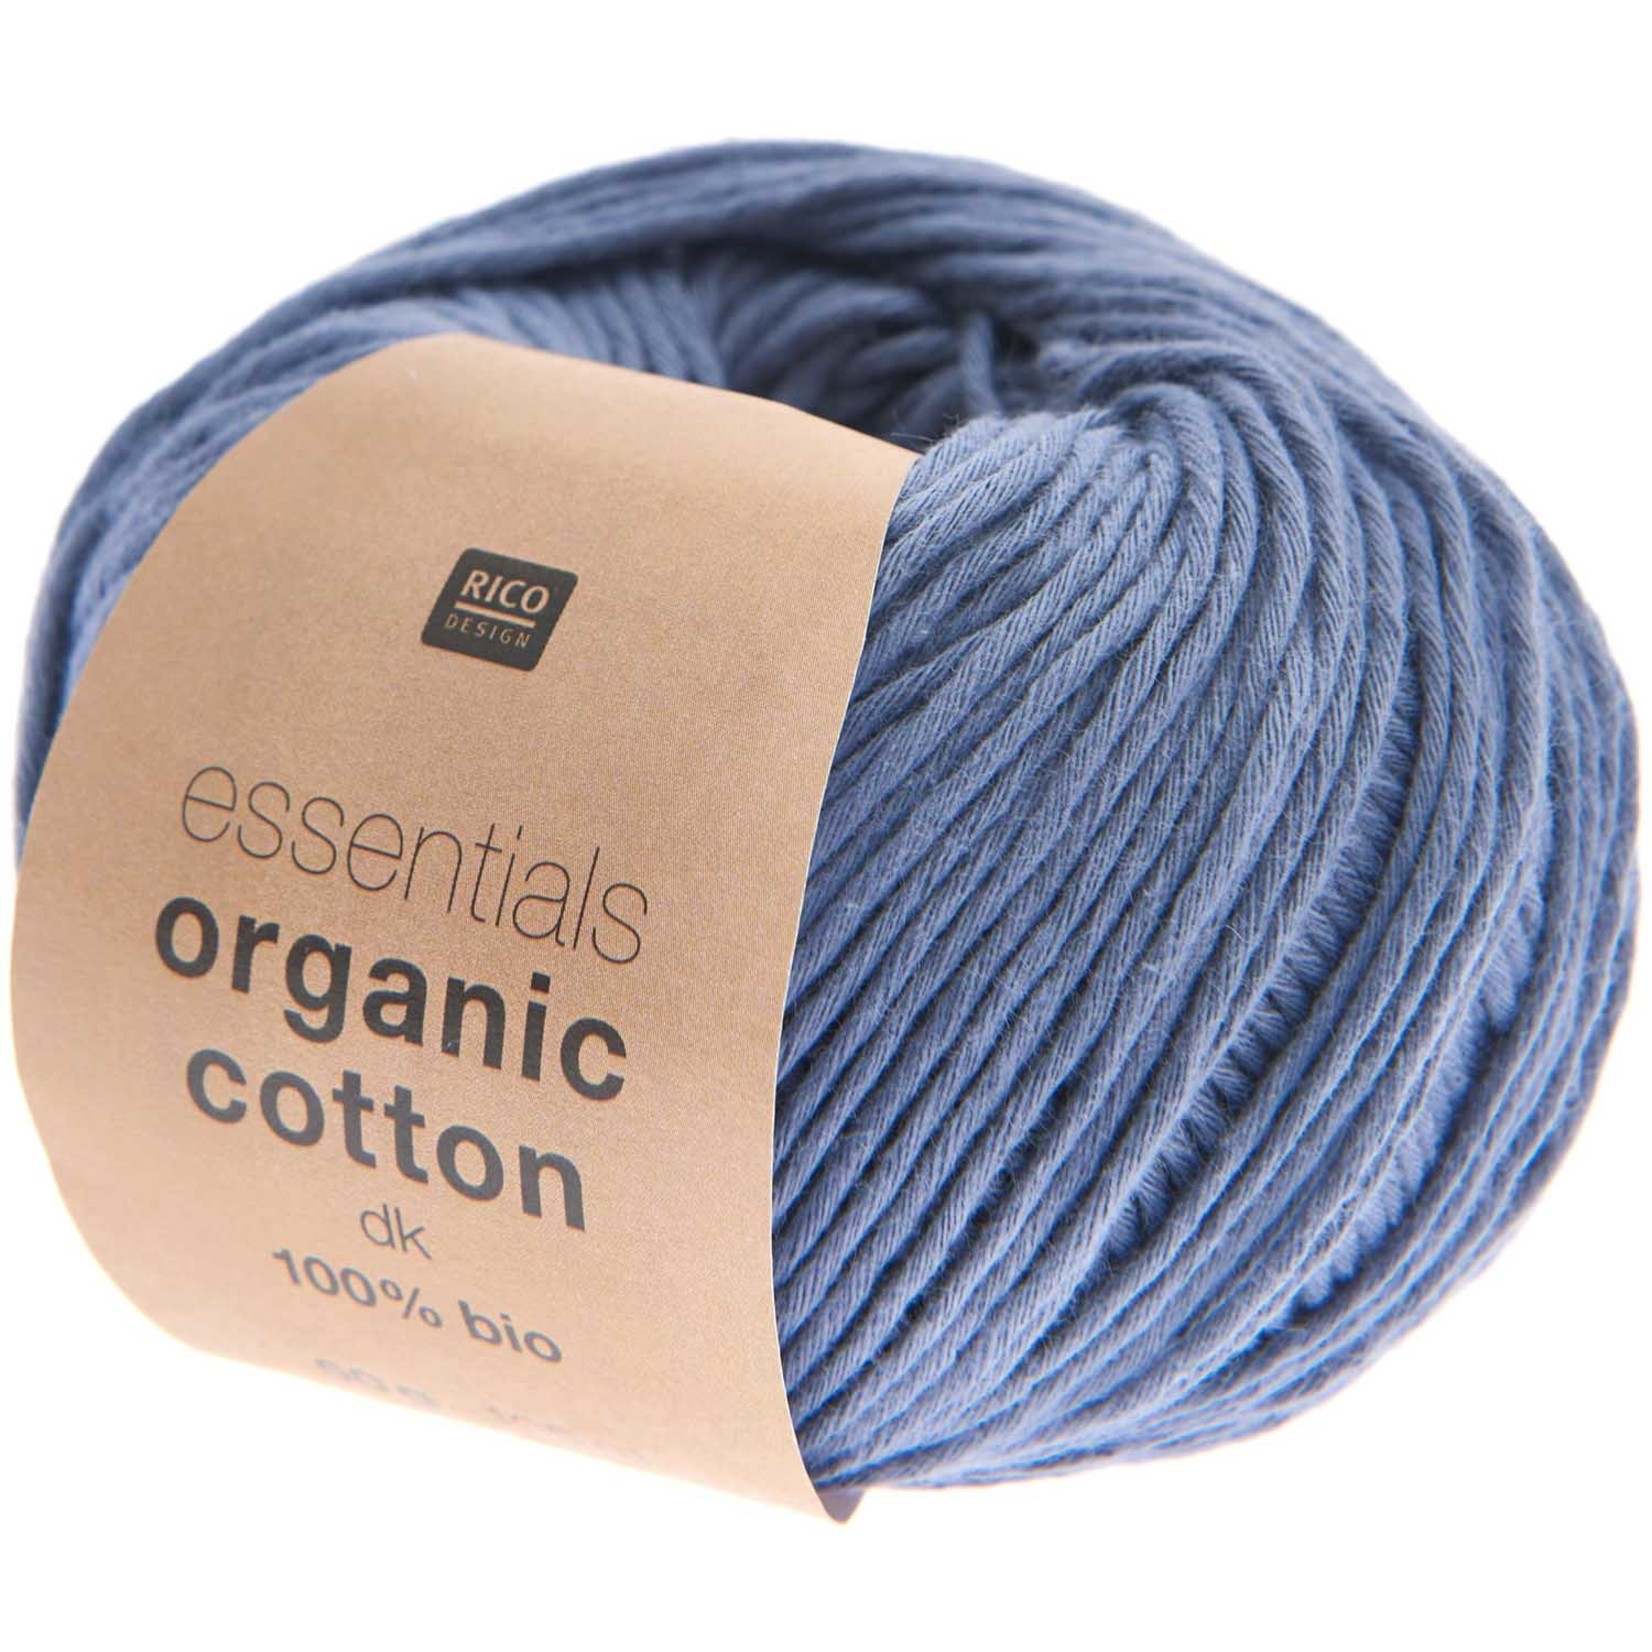 Rico Organic Cotton dk 16 Blue